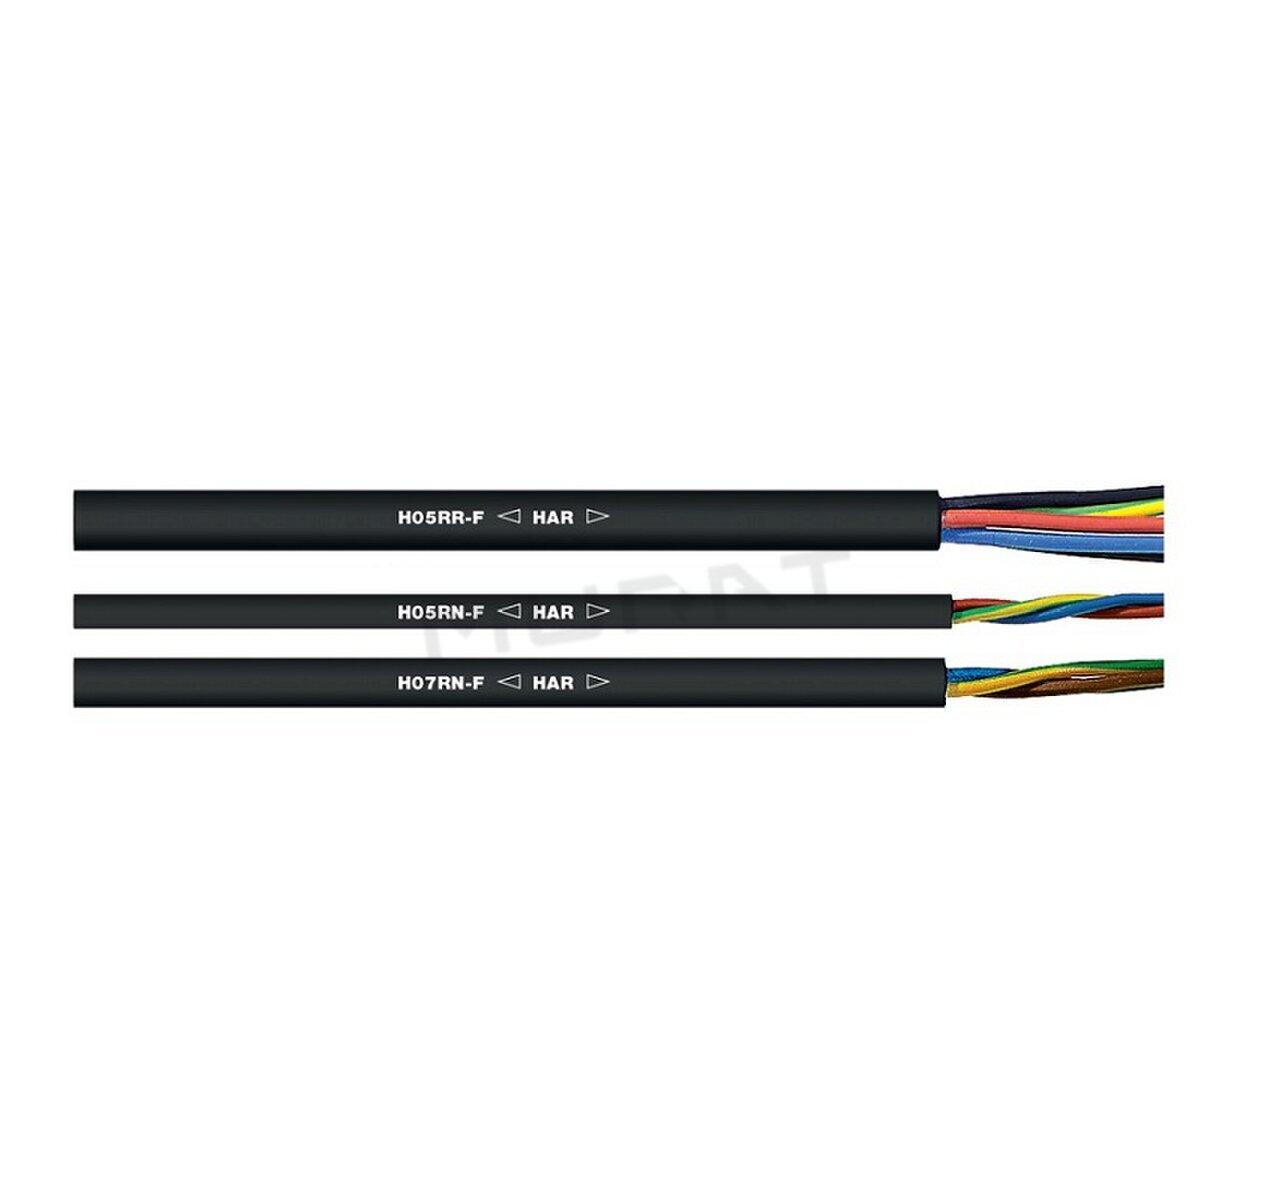 Kábel H07RN-F 5Gx1,5 mm2 silový